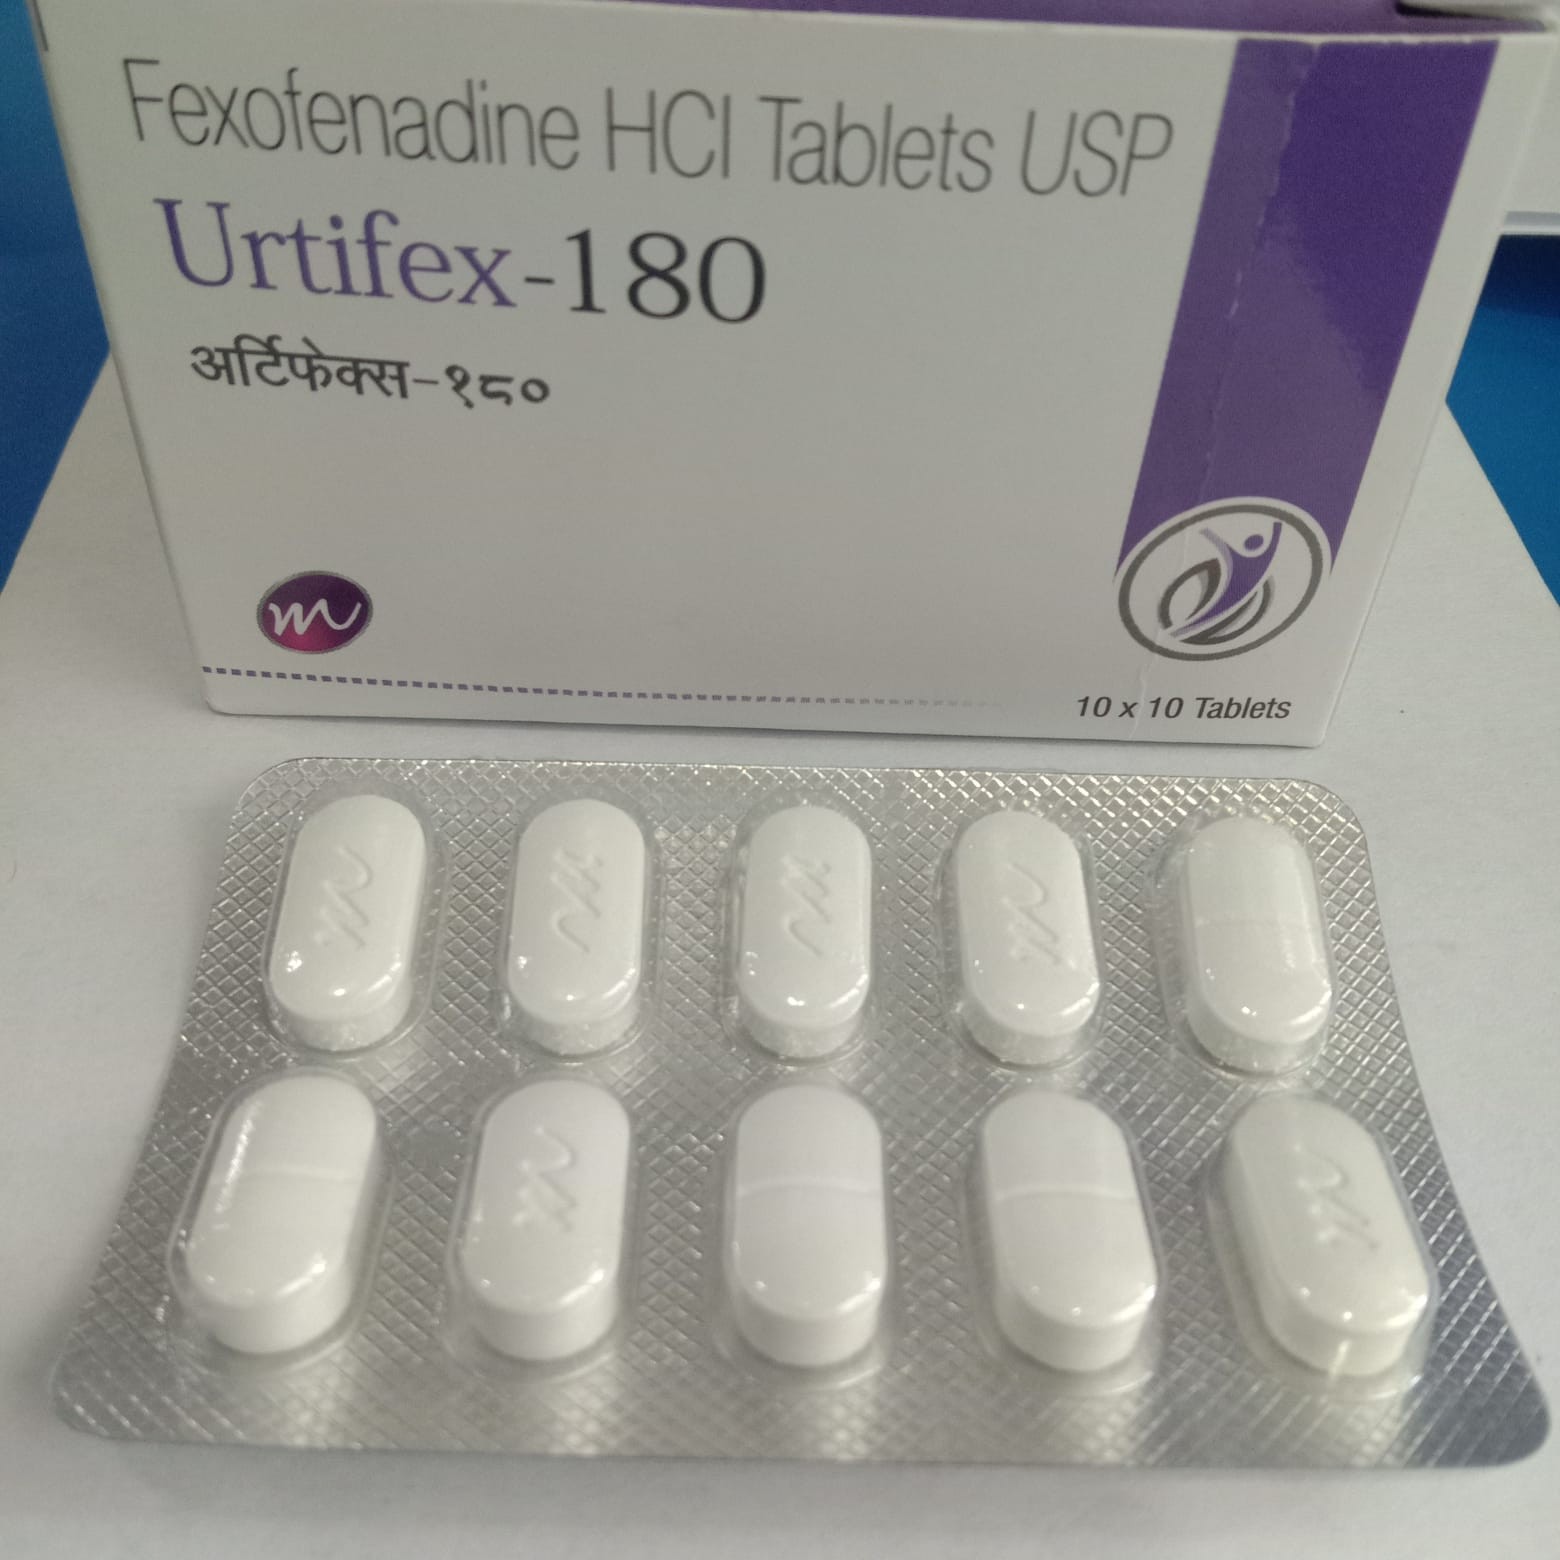 Urtifex-180 Mg Tab